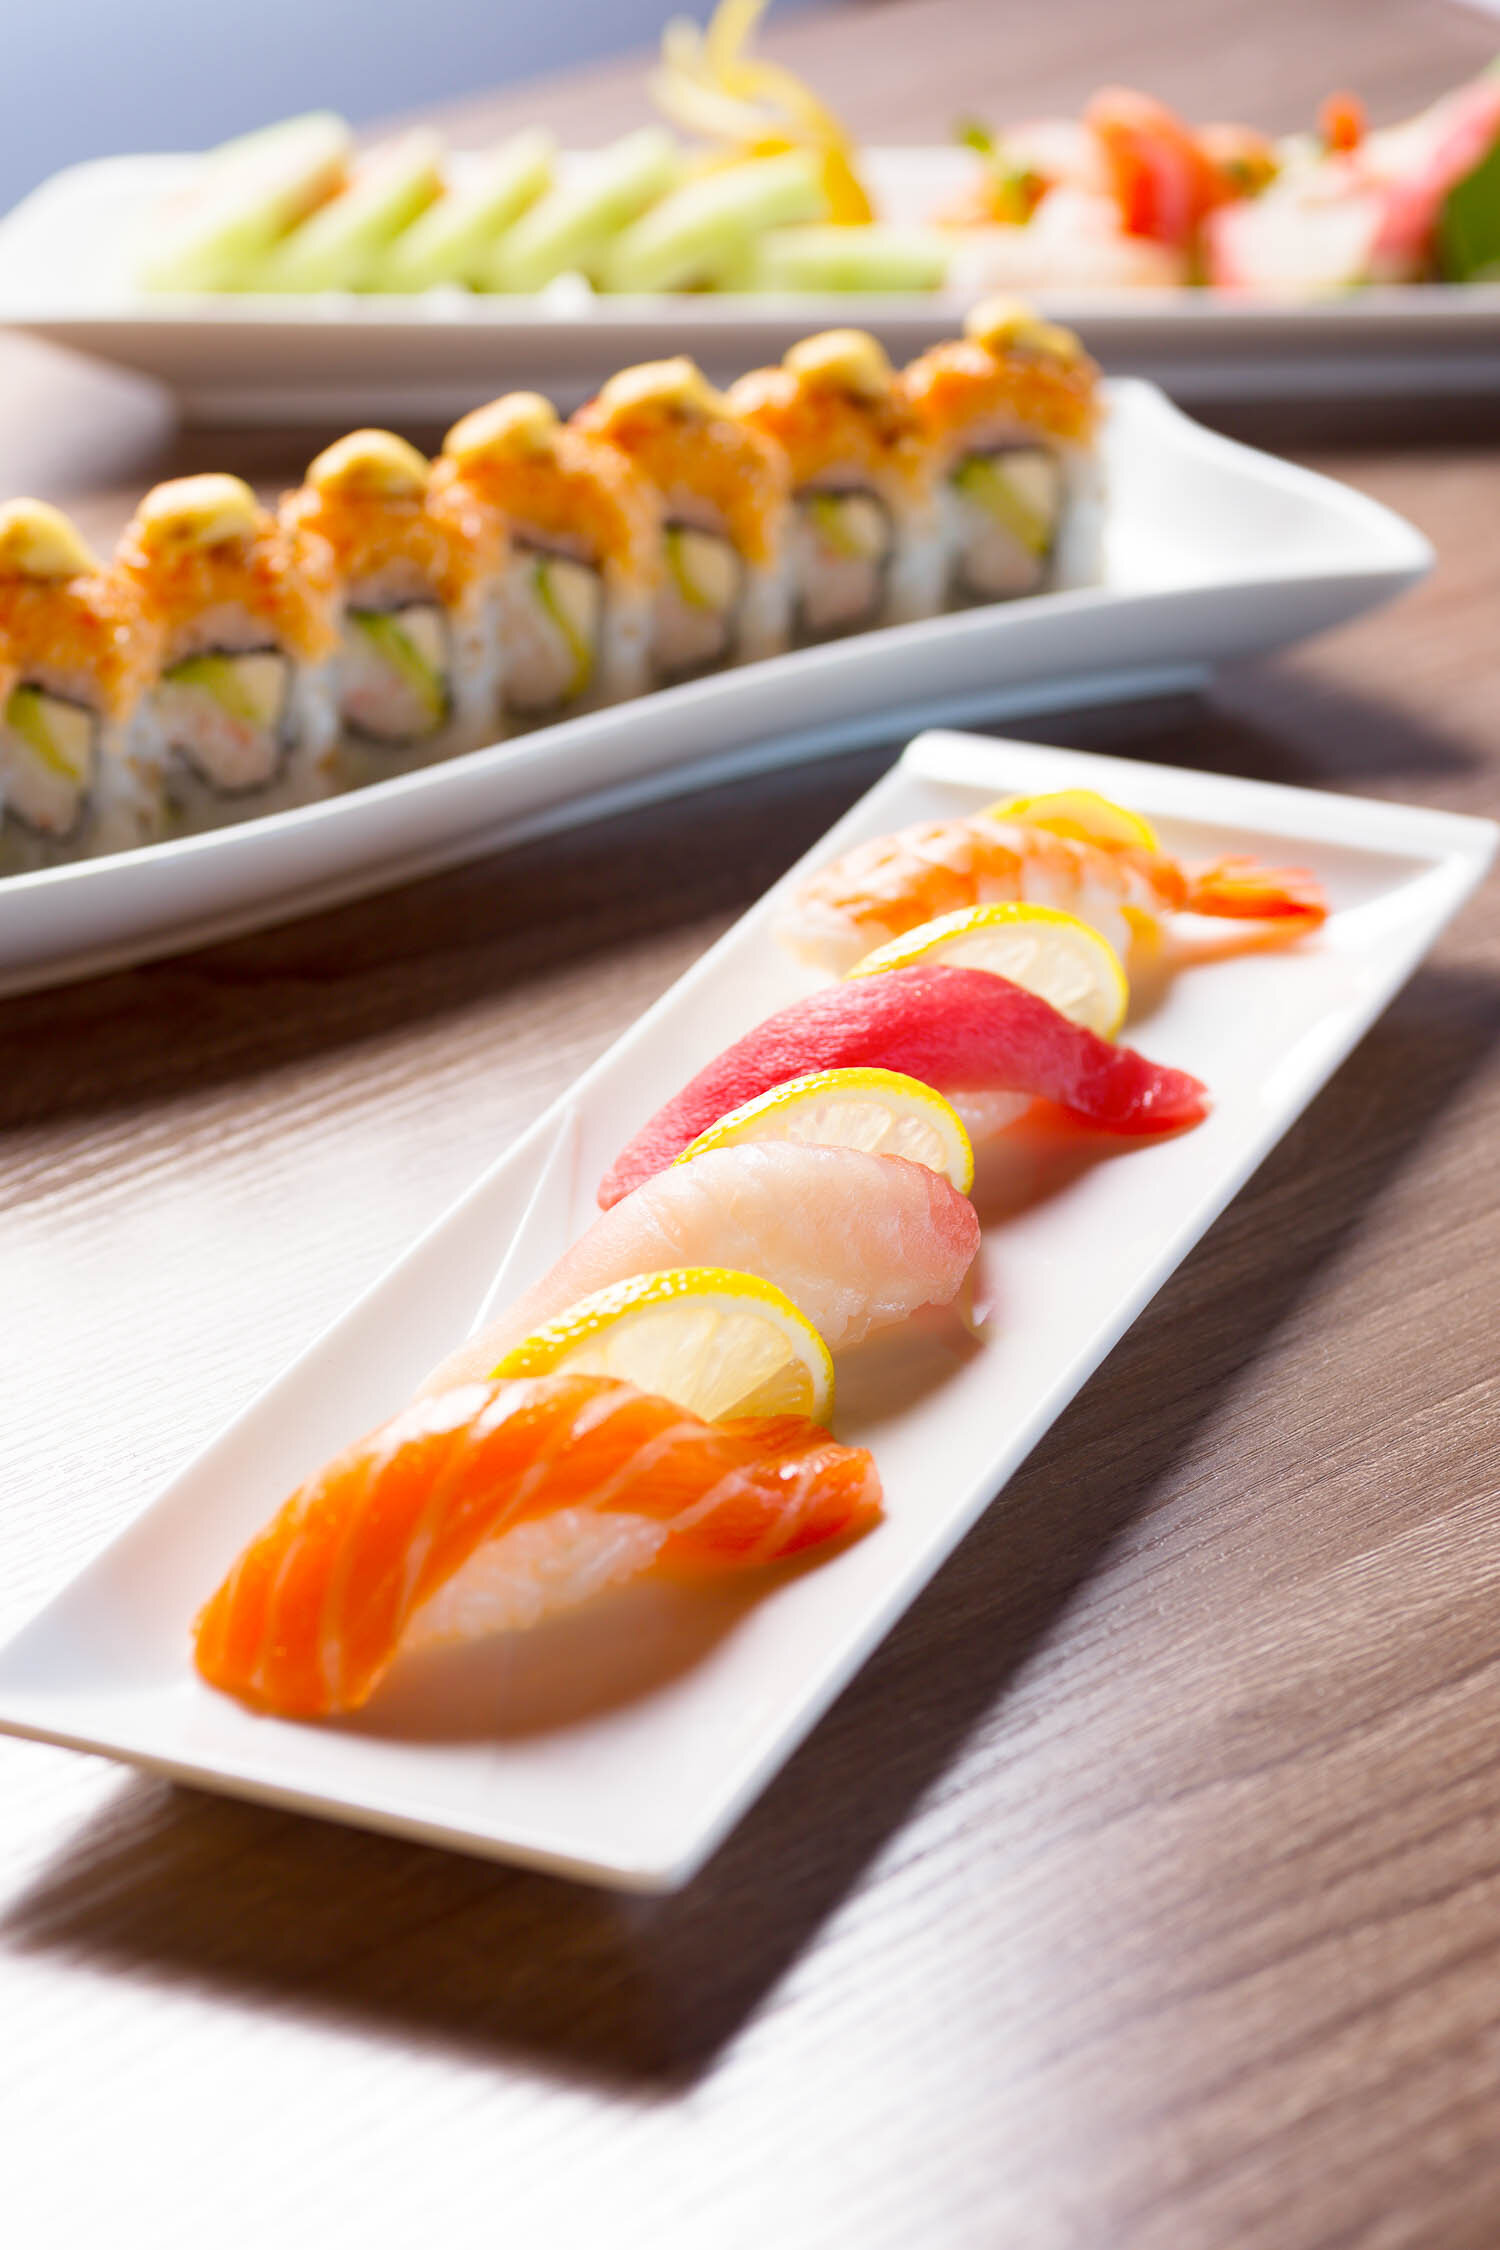 Seafood image of sushi